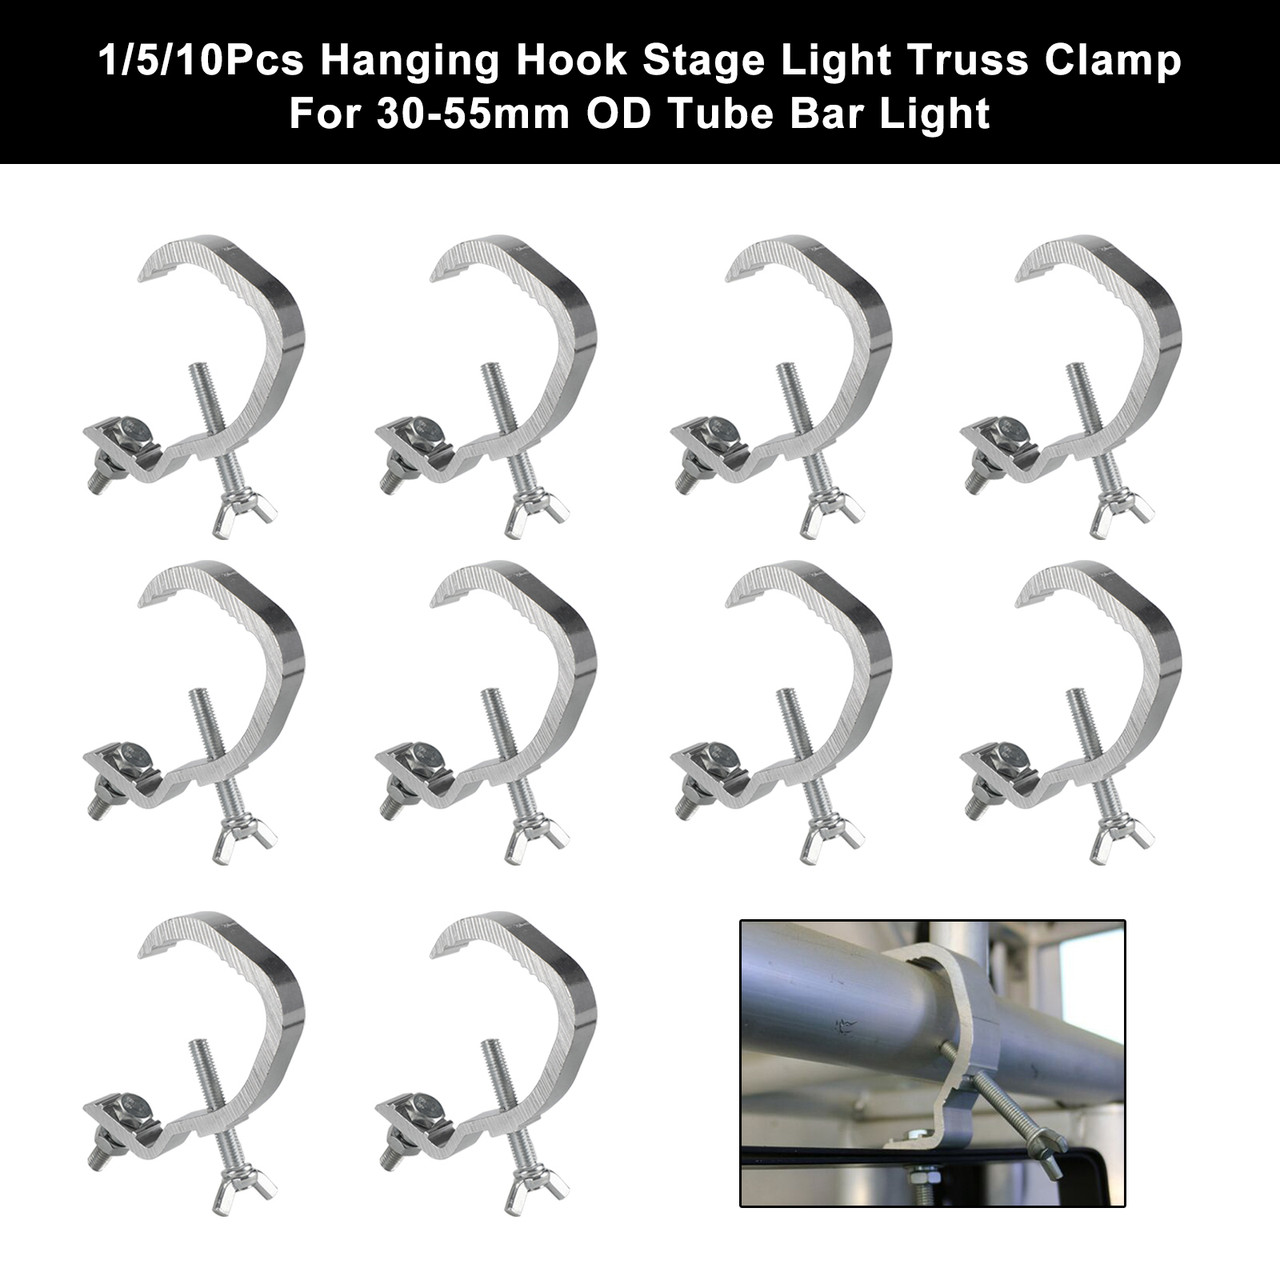 10PCS M Hanging Hook Stage Light Truss Clamp For 30-55mm OD Tube Bar Light